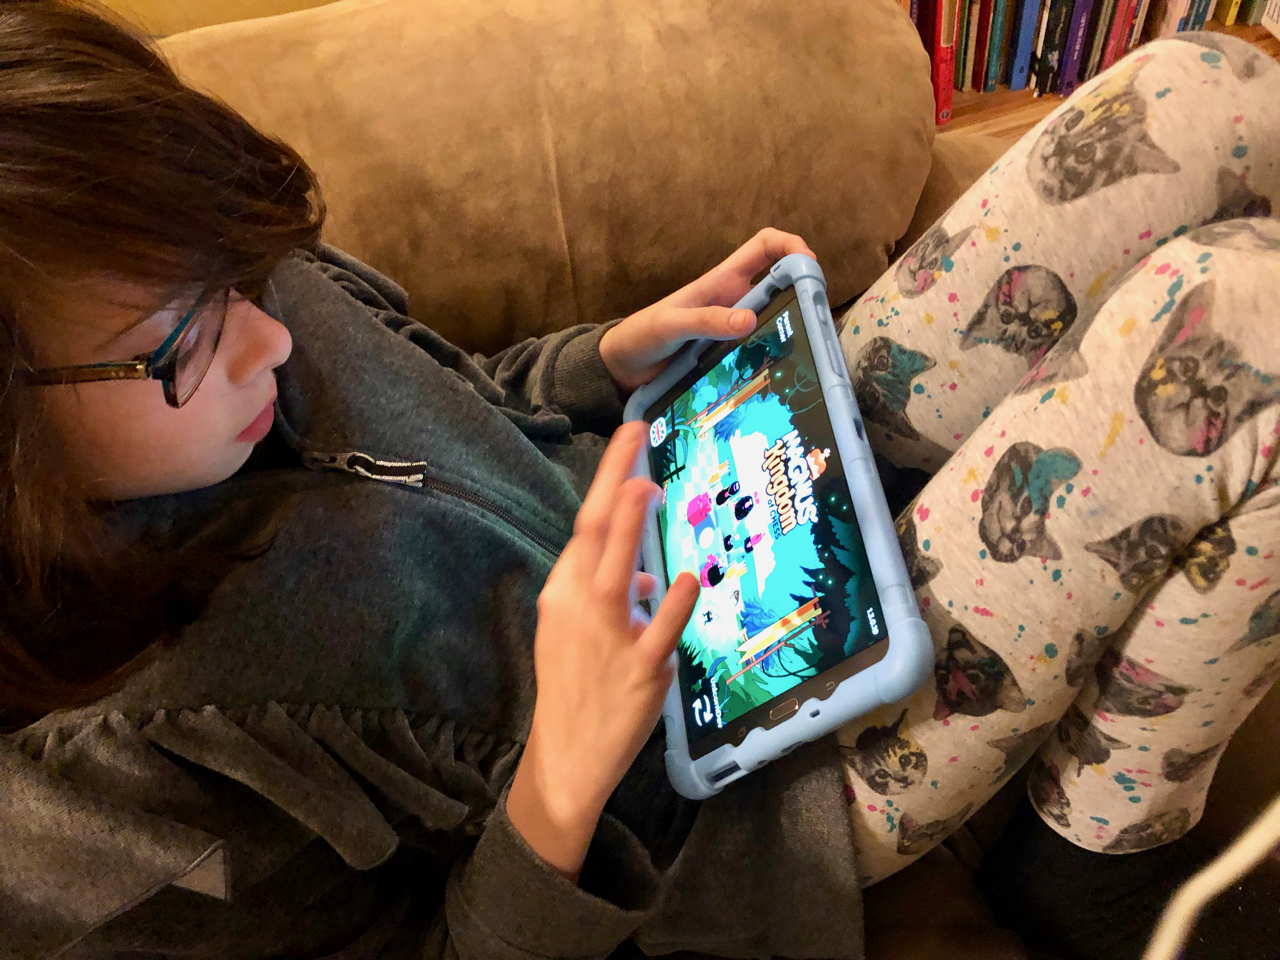 Magnus' Kingdom' Turns Chess Into an Adventure Game - GeekDad